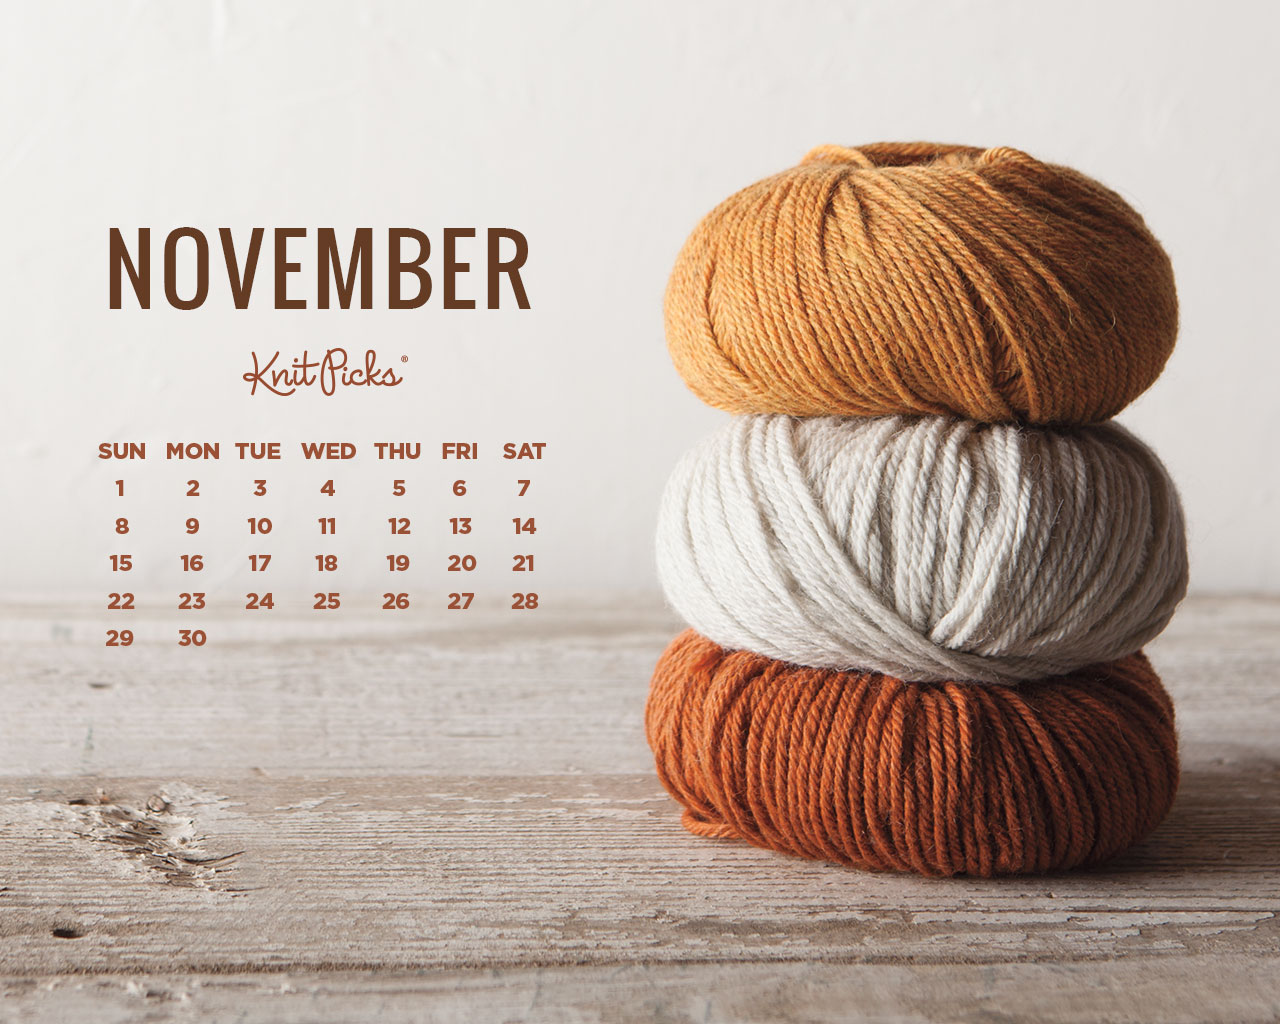 November 2015 Wallpaper Calendar - KnitPicks Staff Knitting Blog